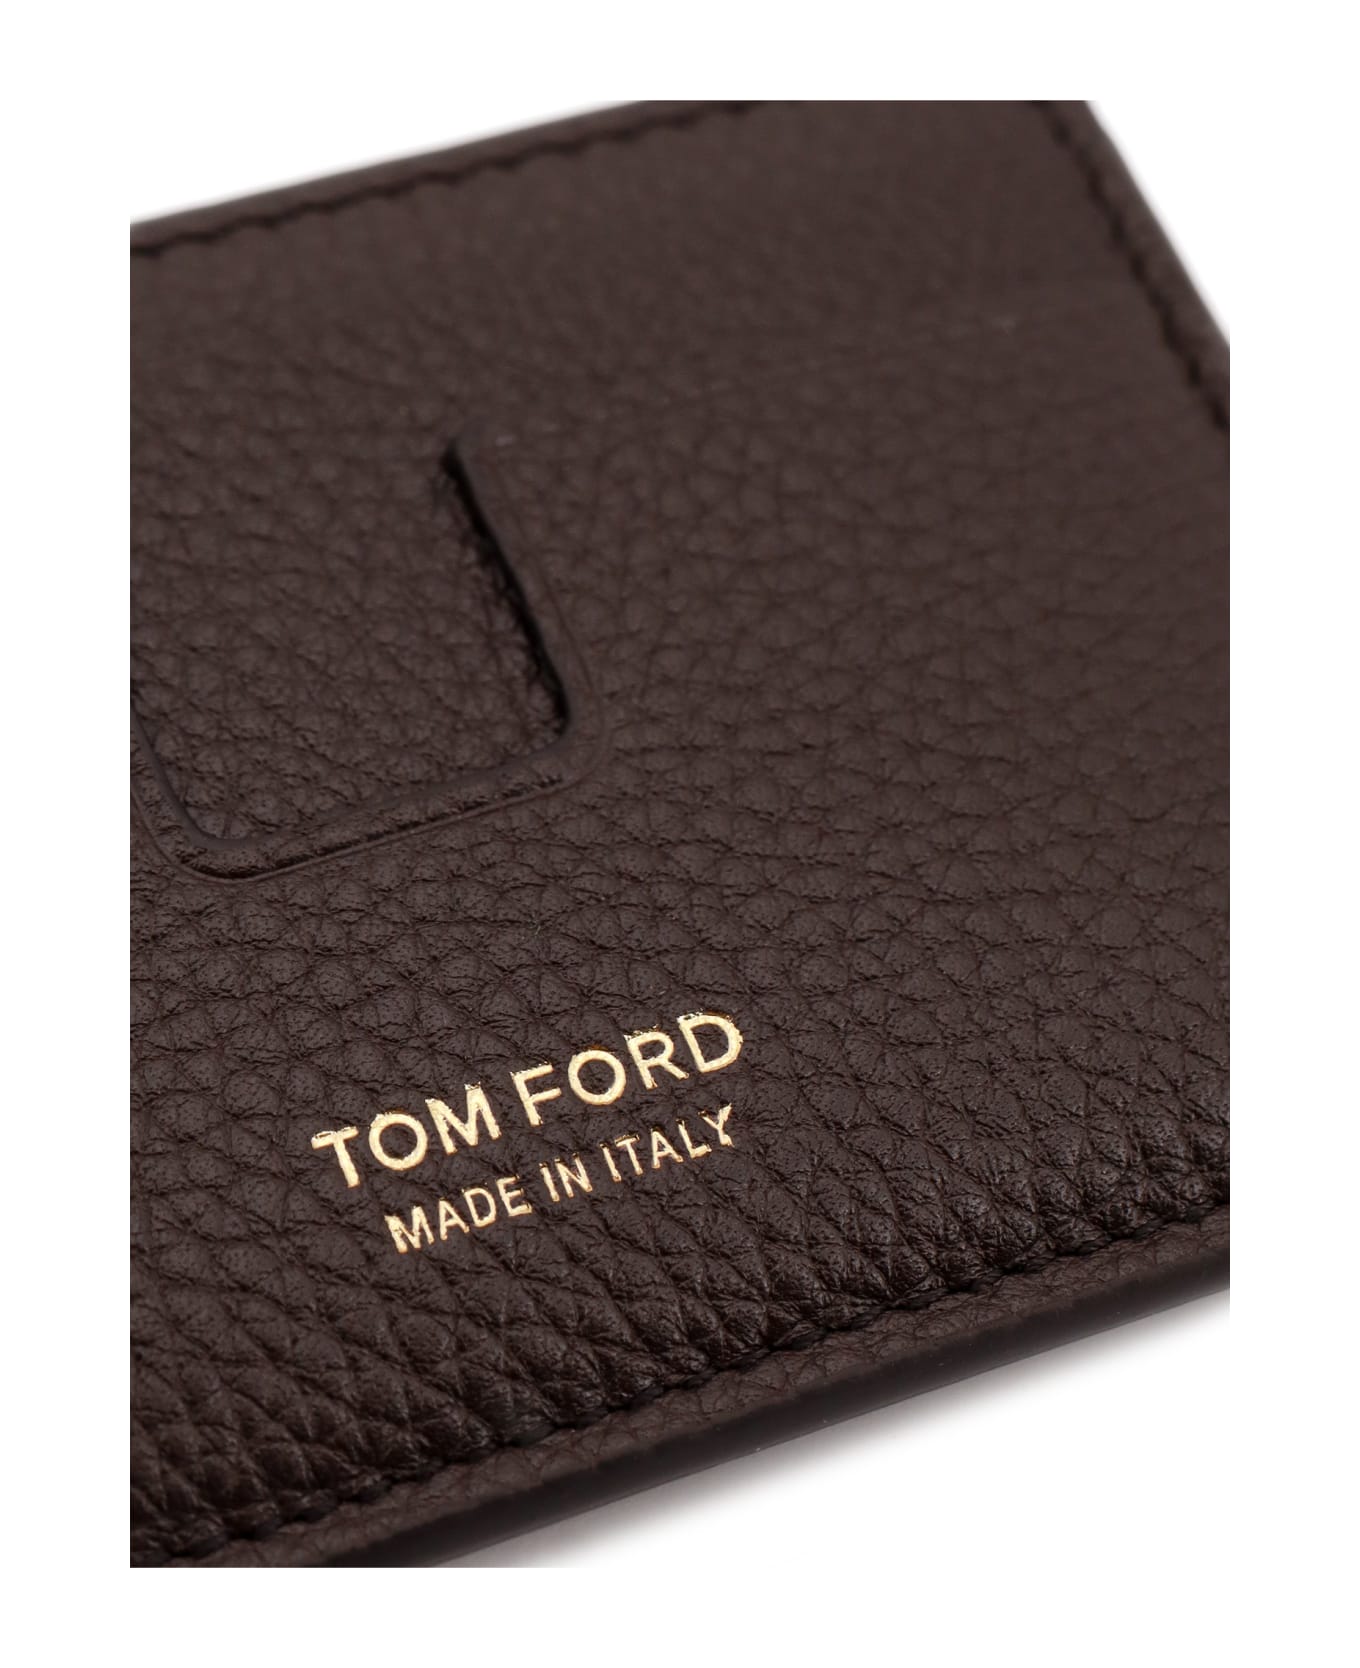 Tom Ford Wallet - Brown